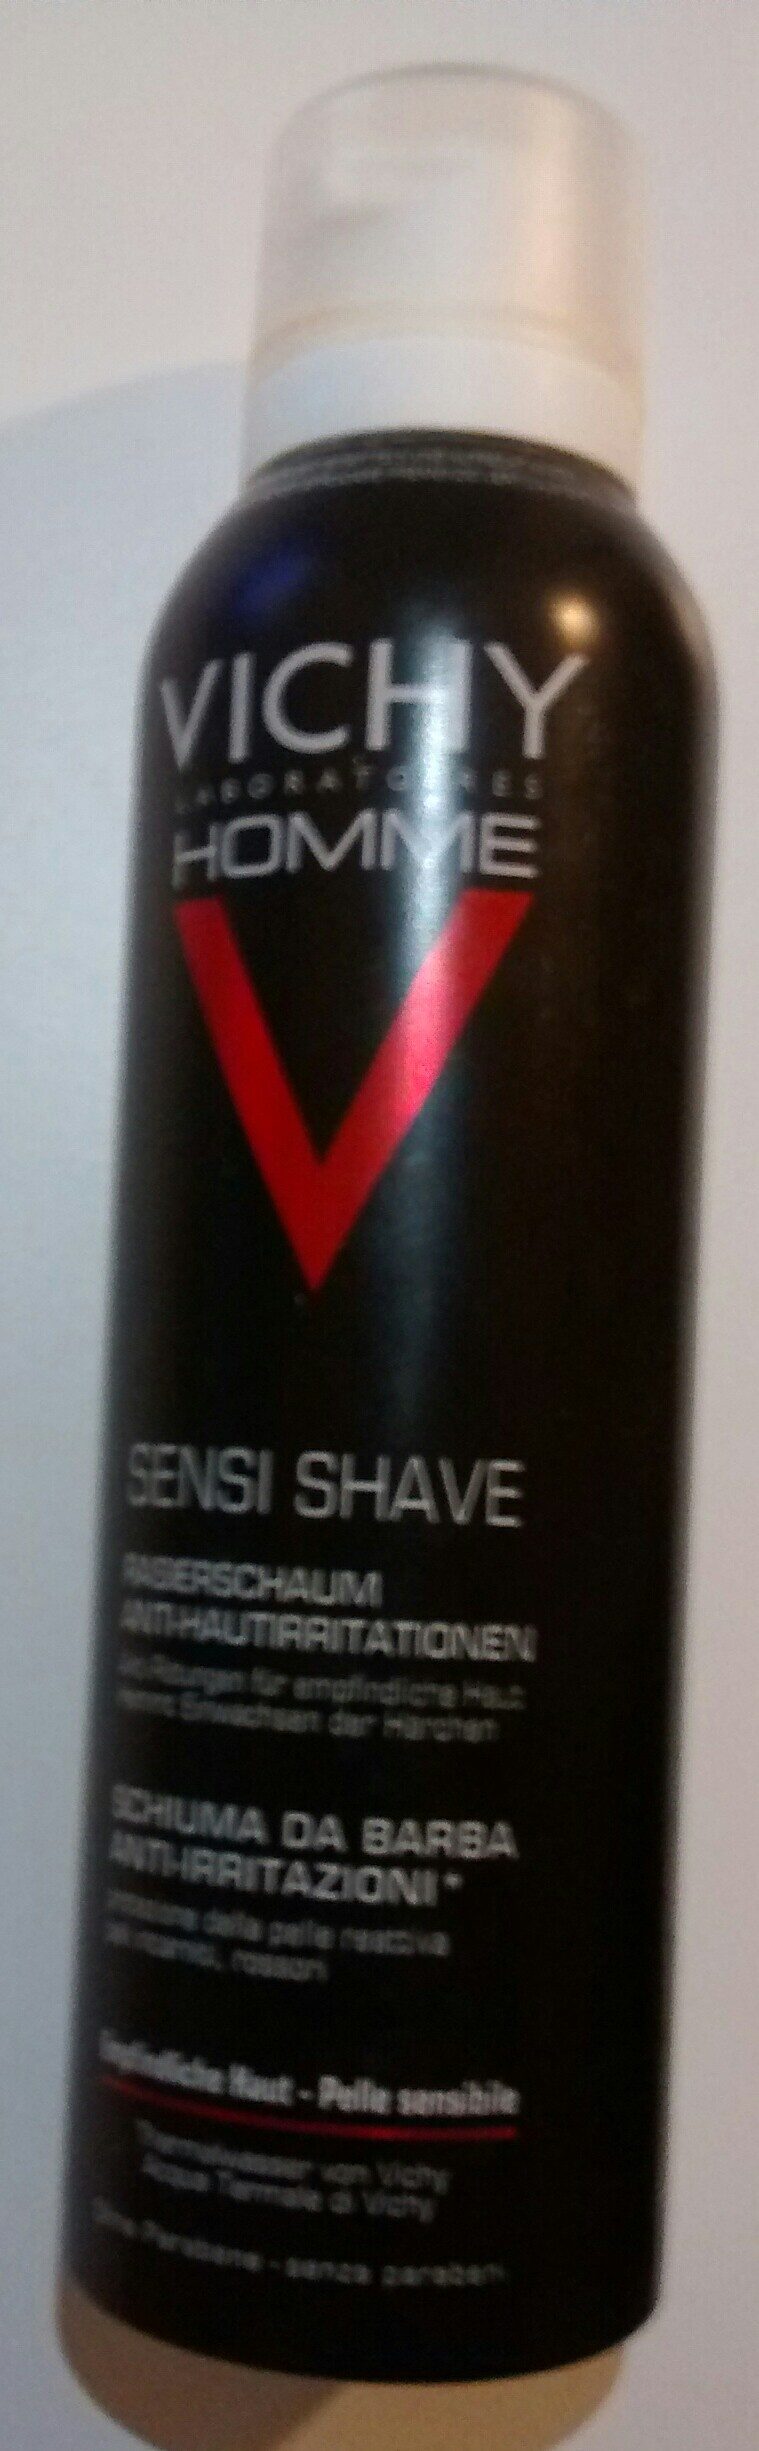 Sensi Shave Rasierschaum - Produkt - de